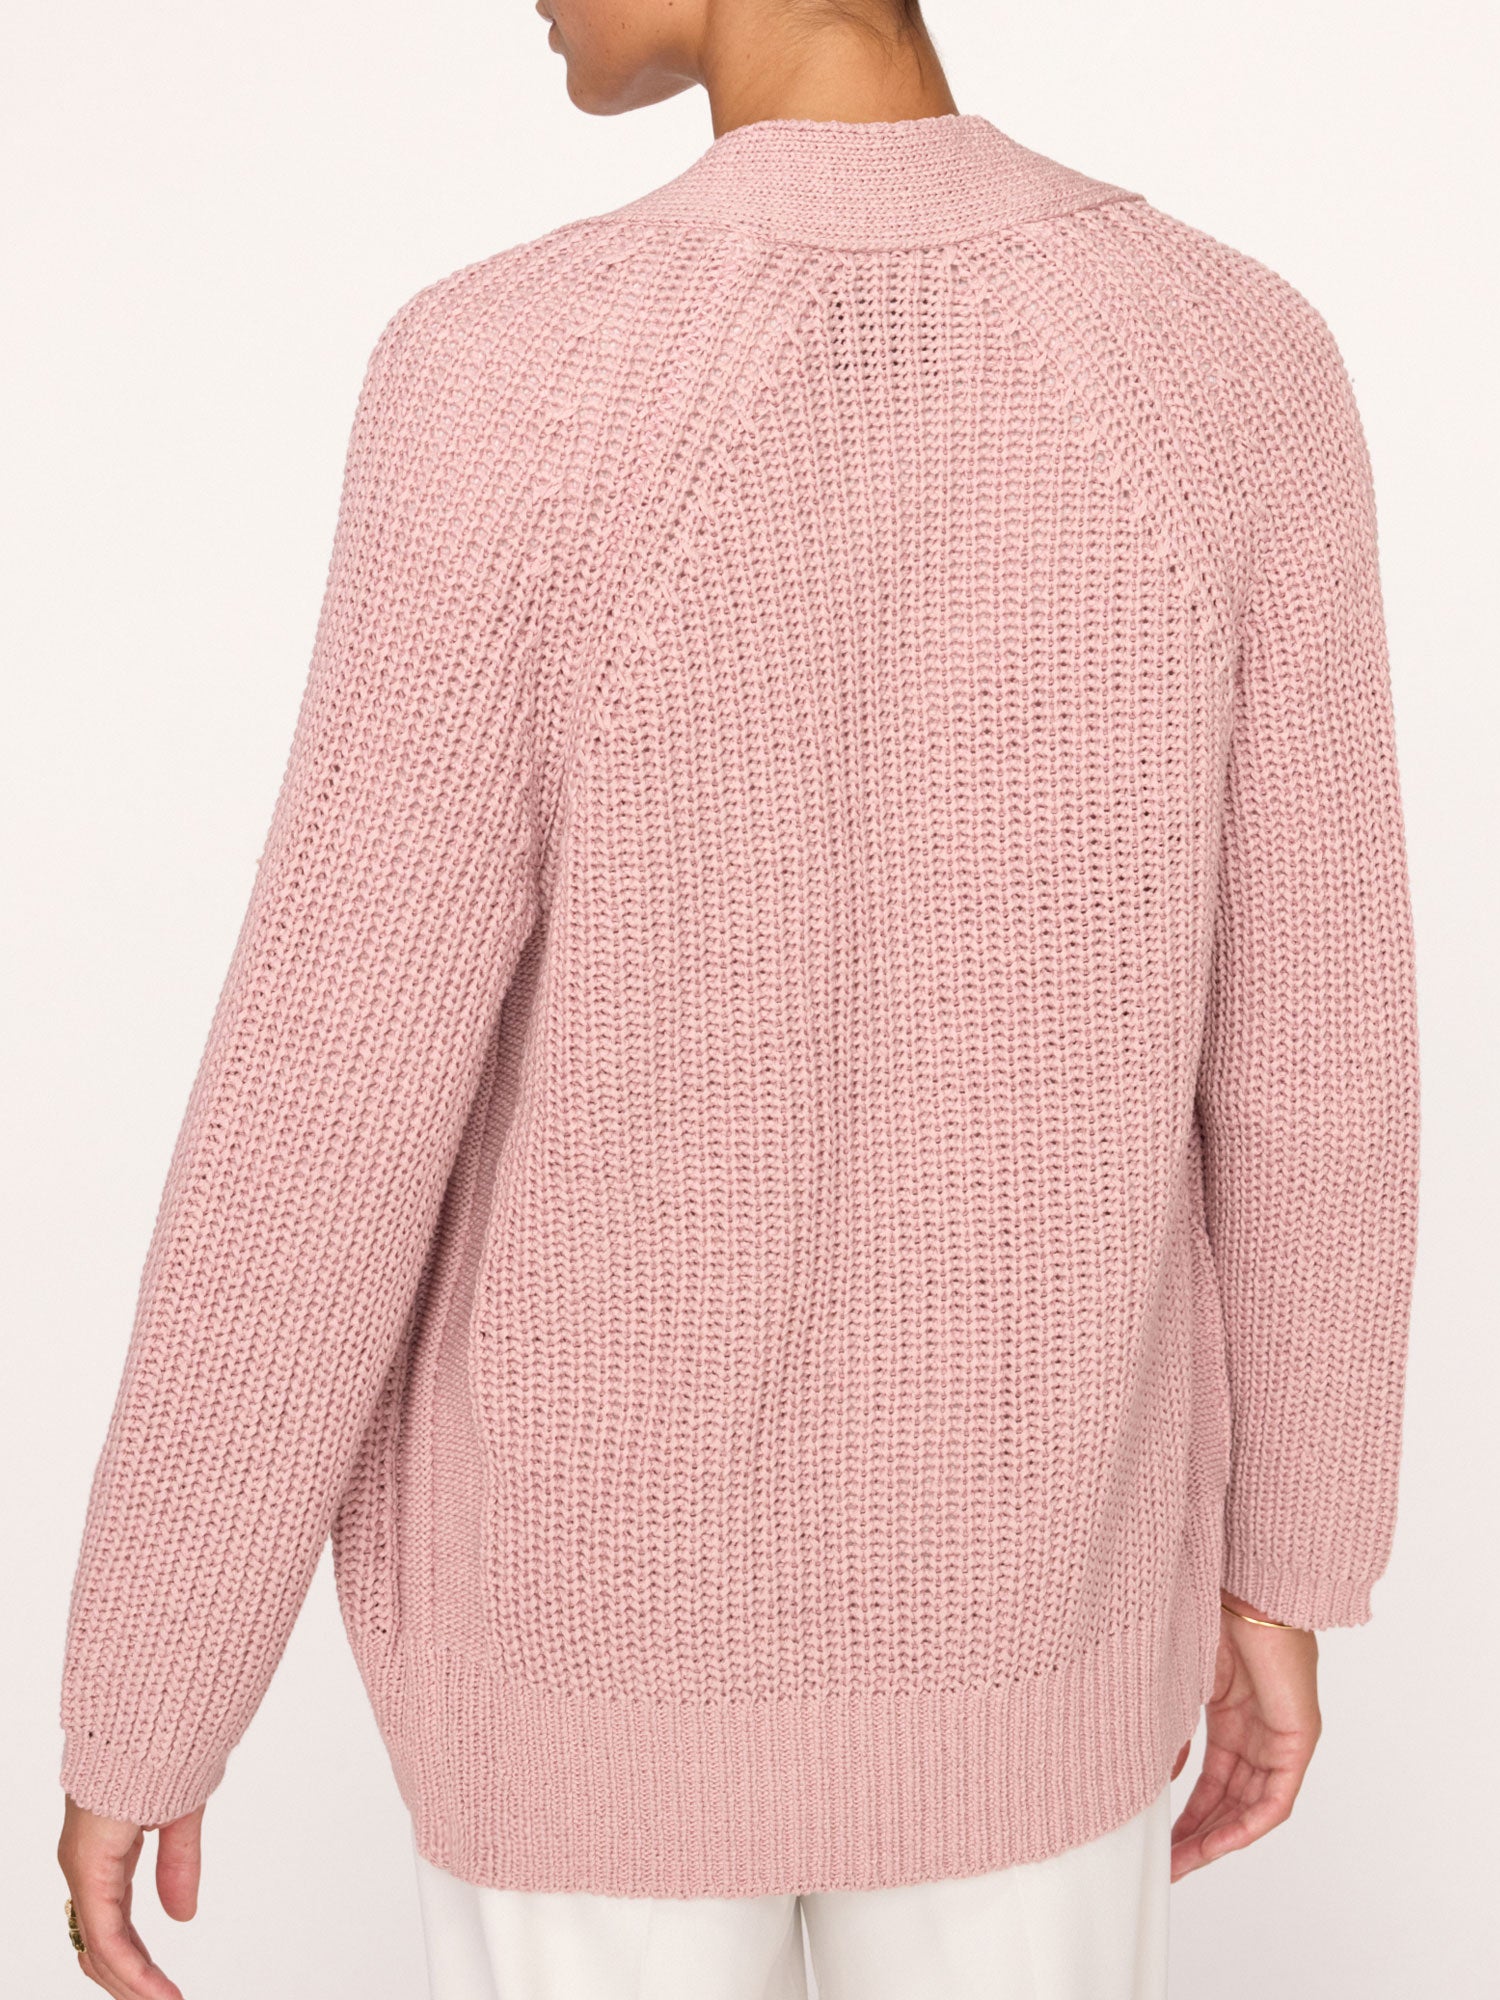 Jen linen cotton pink cardigan sweater back view